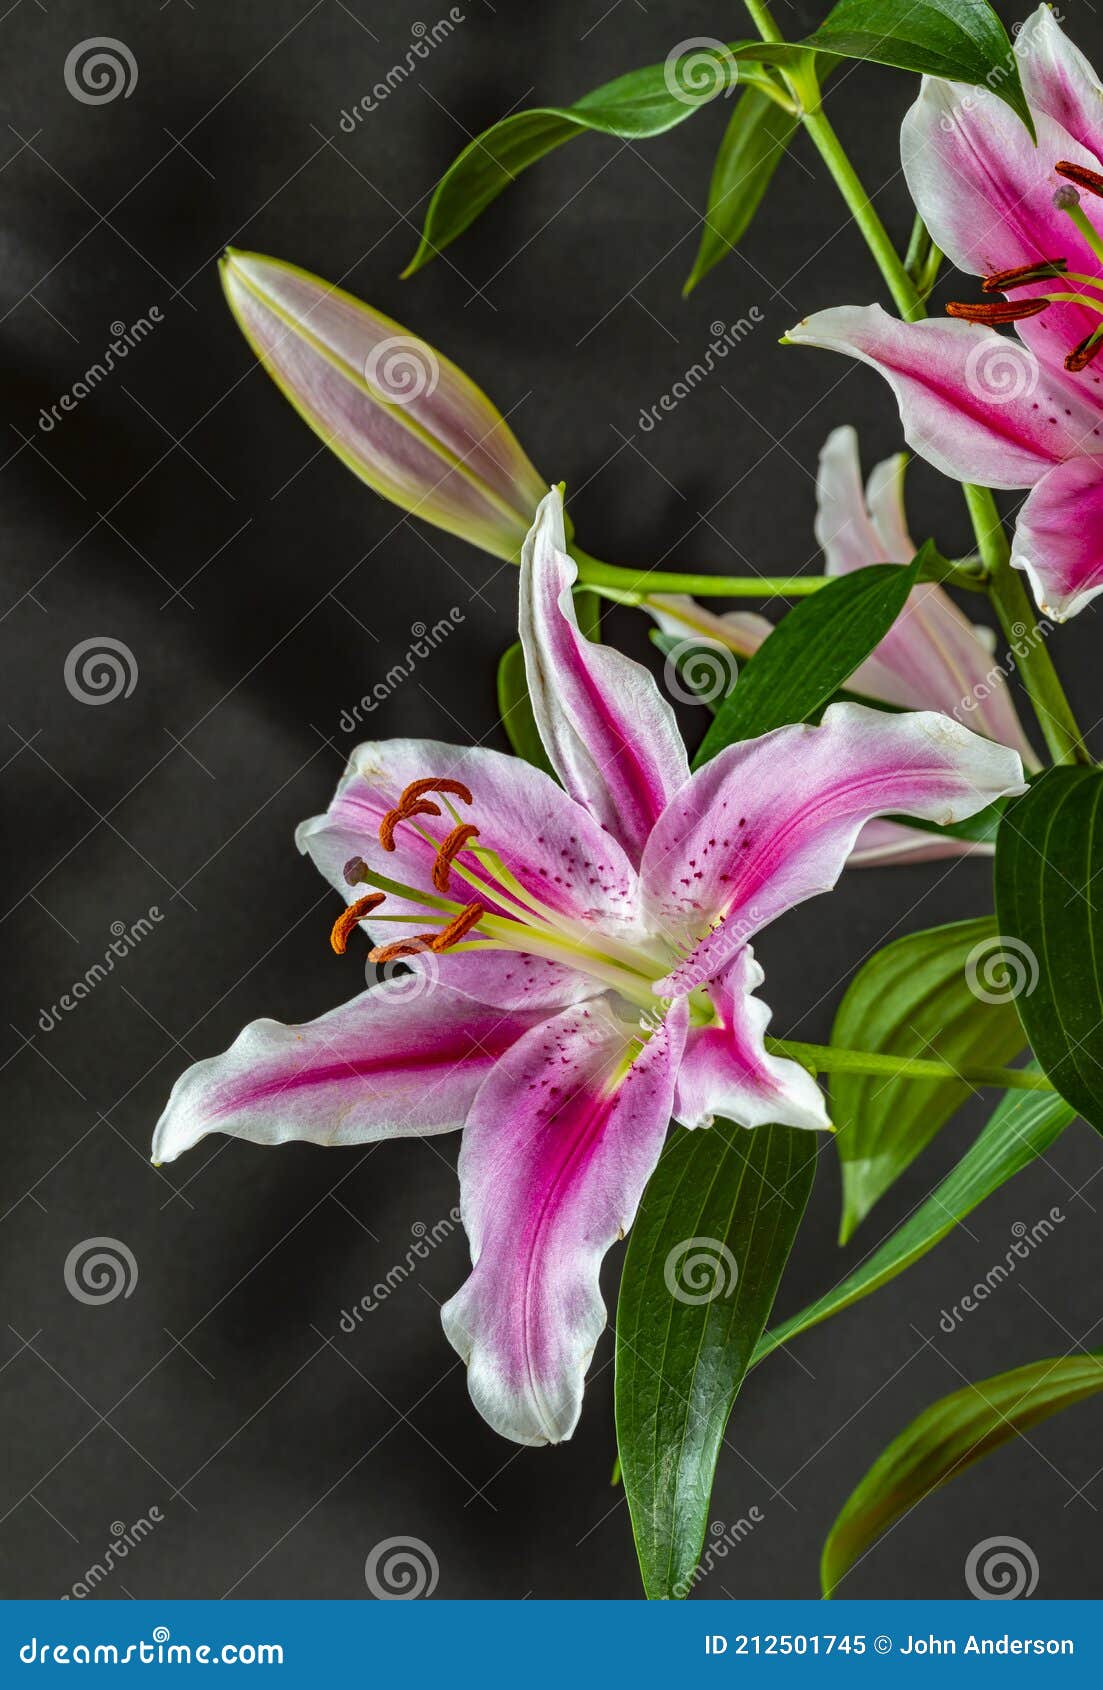 Pics stargazer lily Stargazer lily